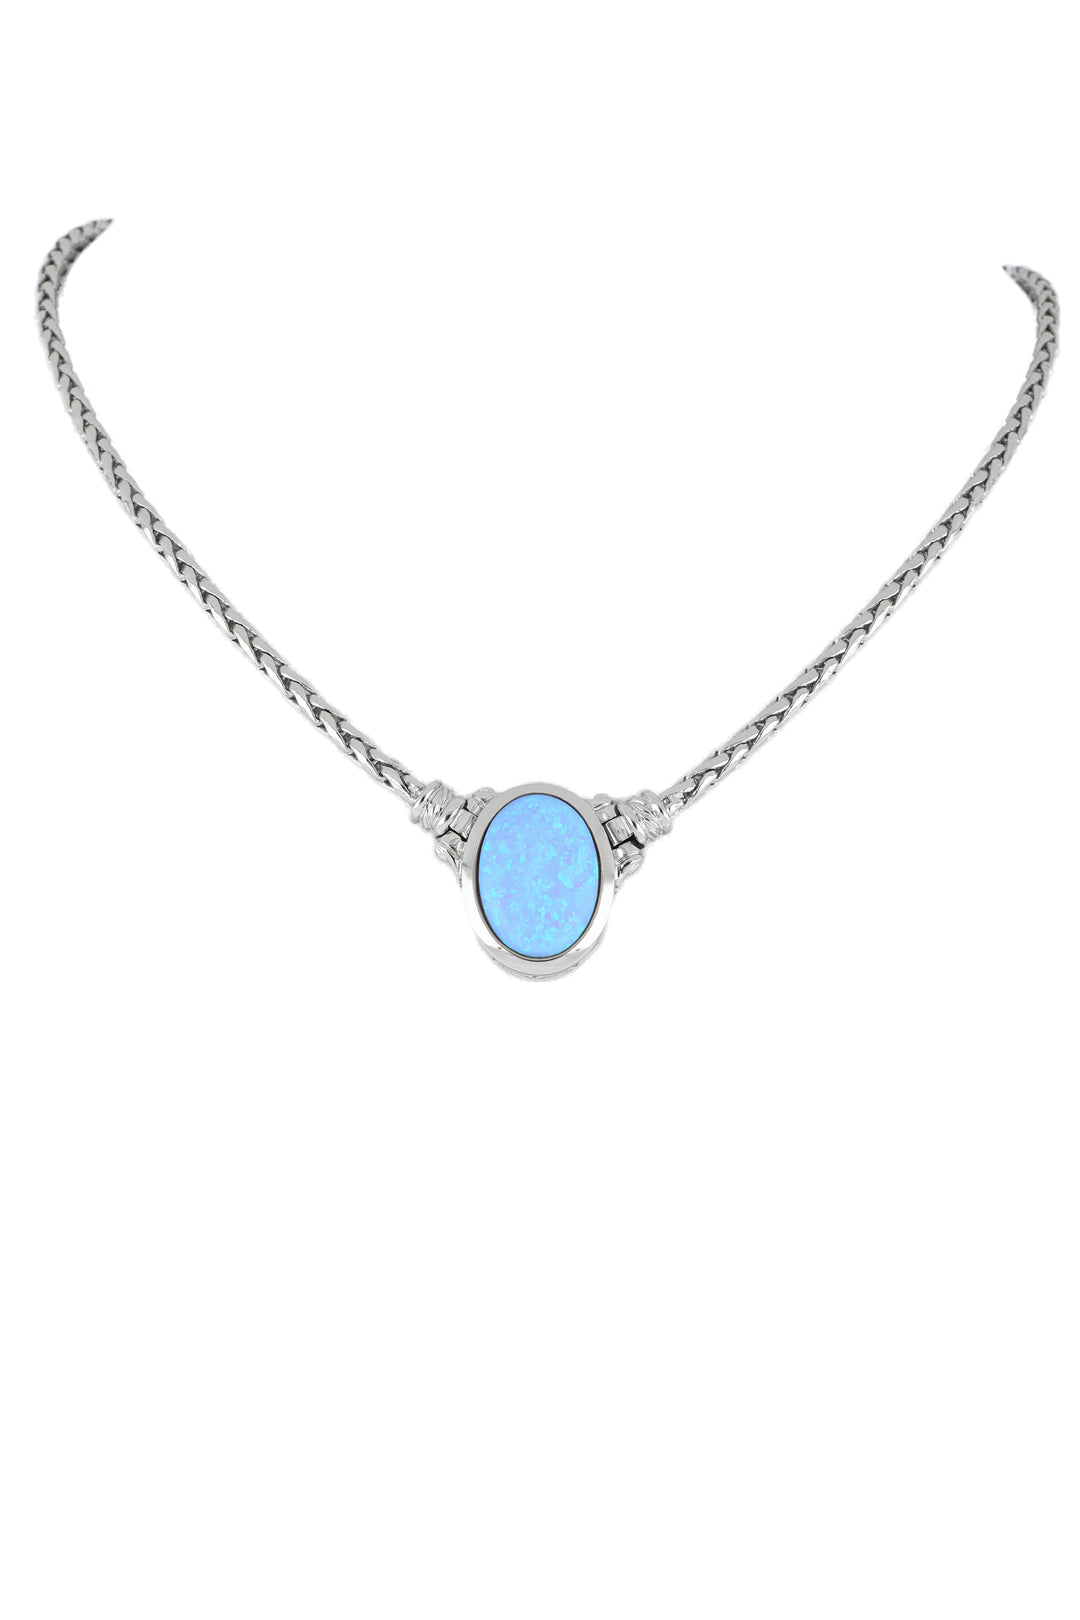 Opalas Do Mar Adjustable Large Oval-Shaped Stone Necklace